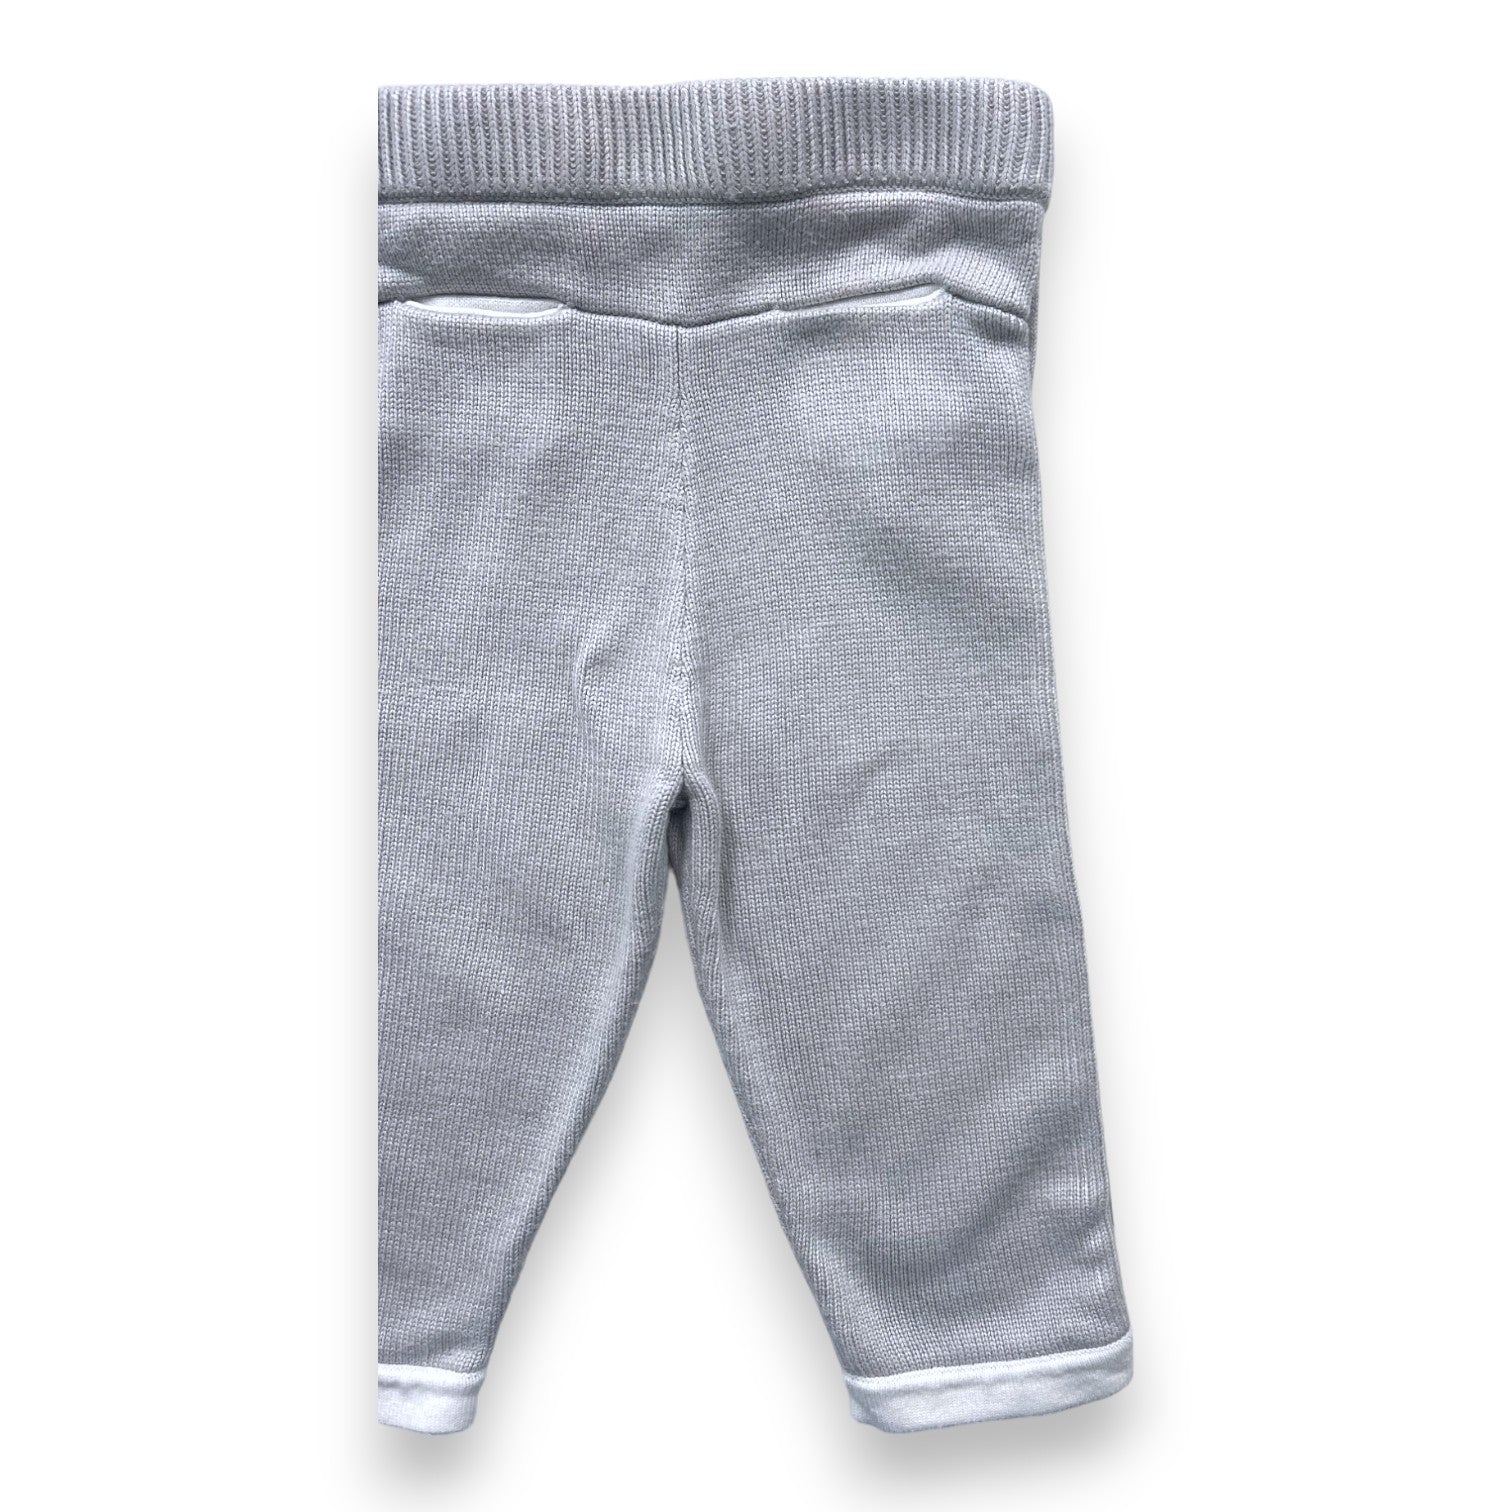 BABY DIOR - Ensemble gilet et pantalon gris liserés blancs - 9 mois